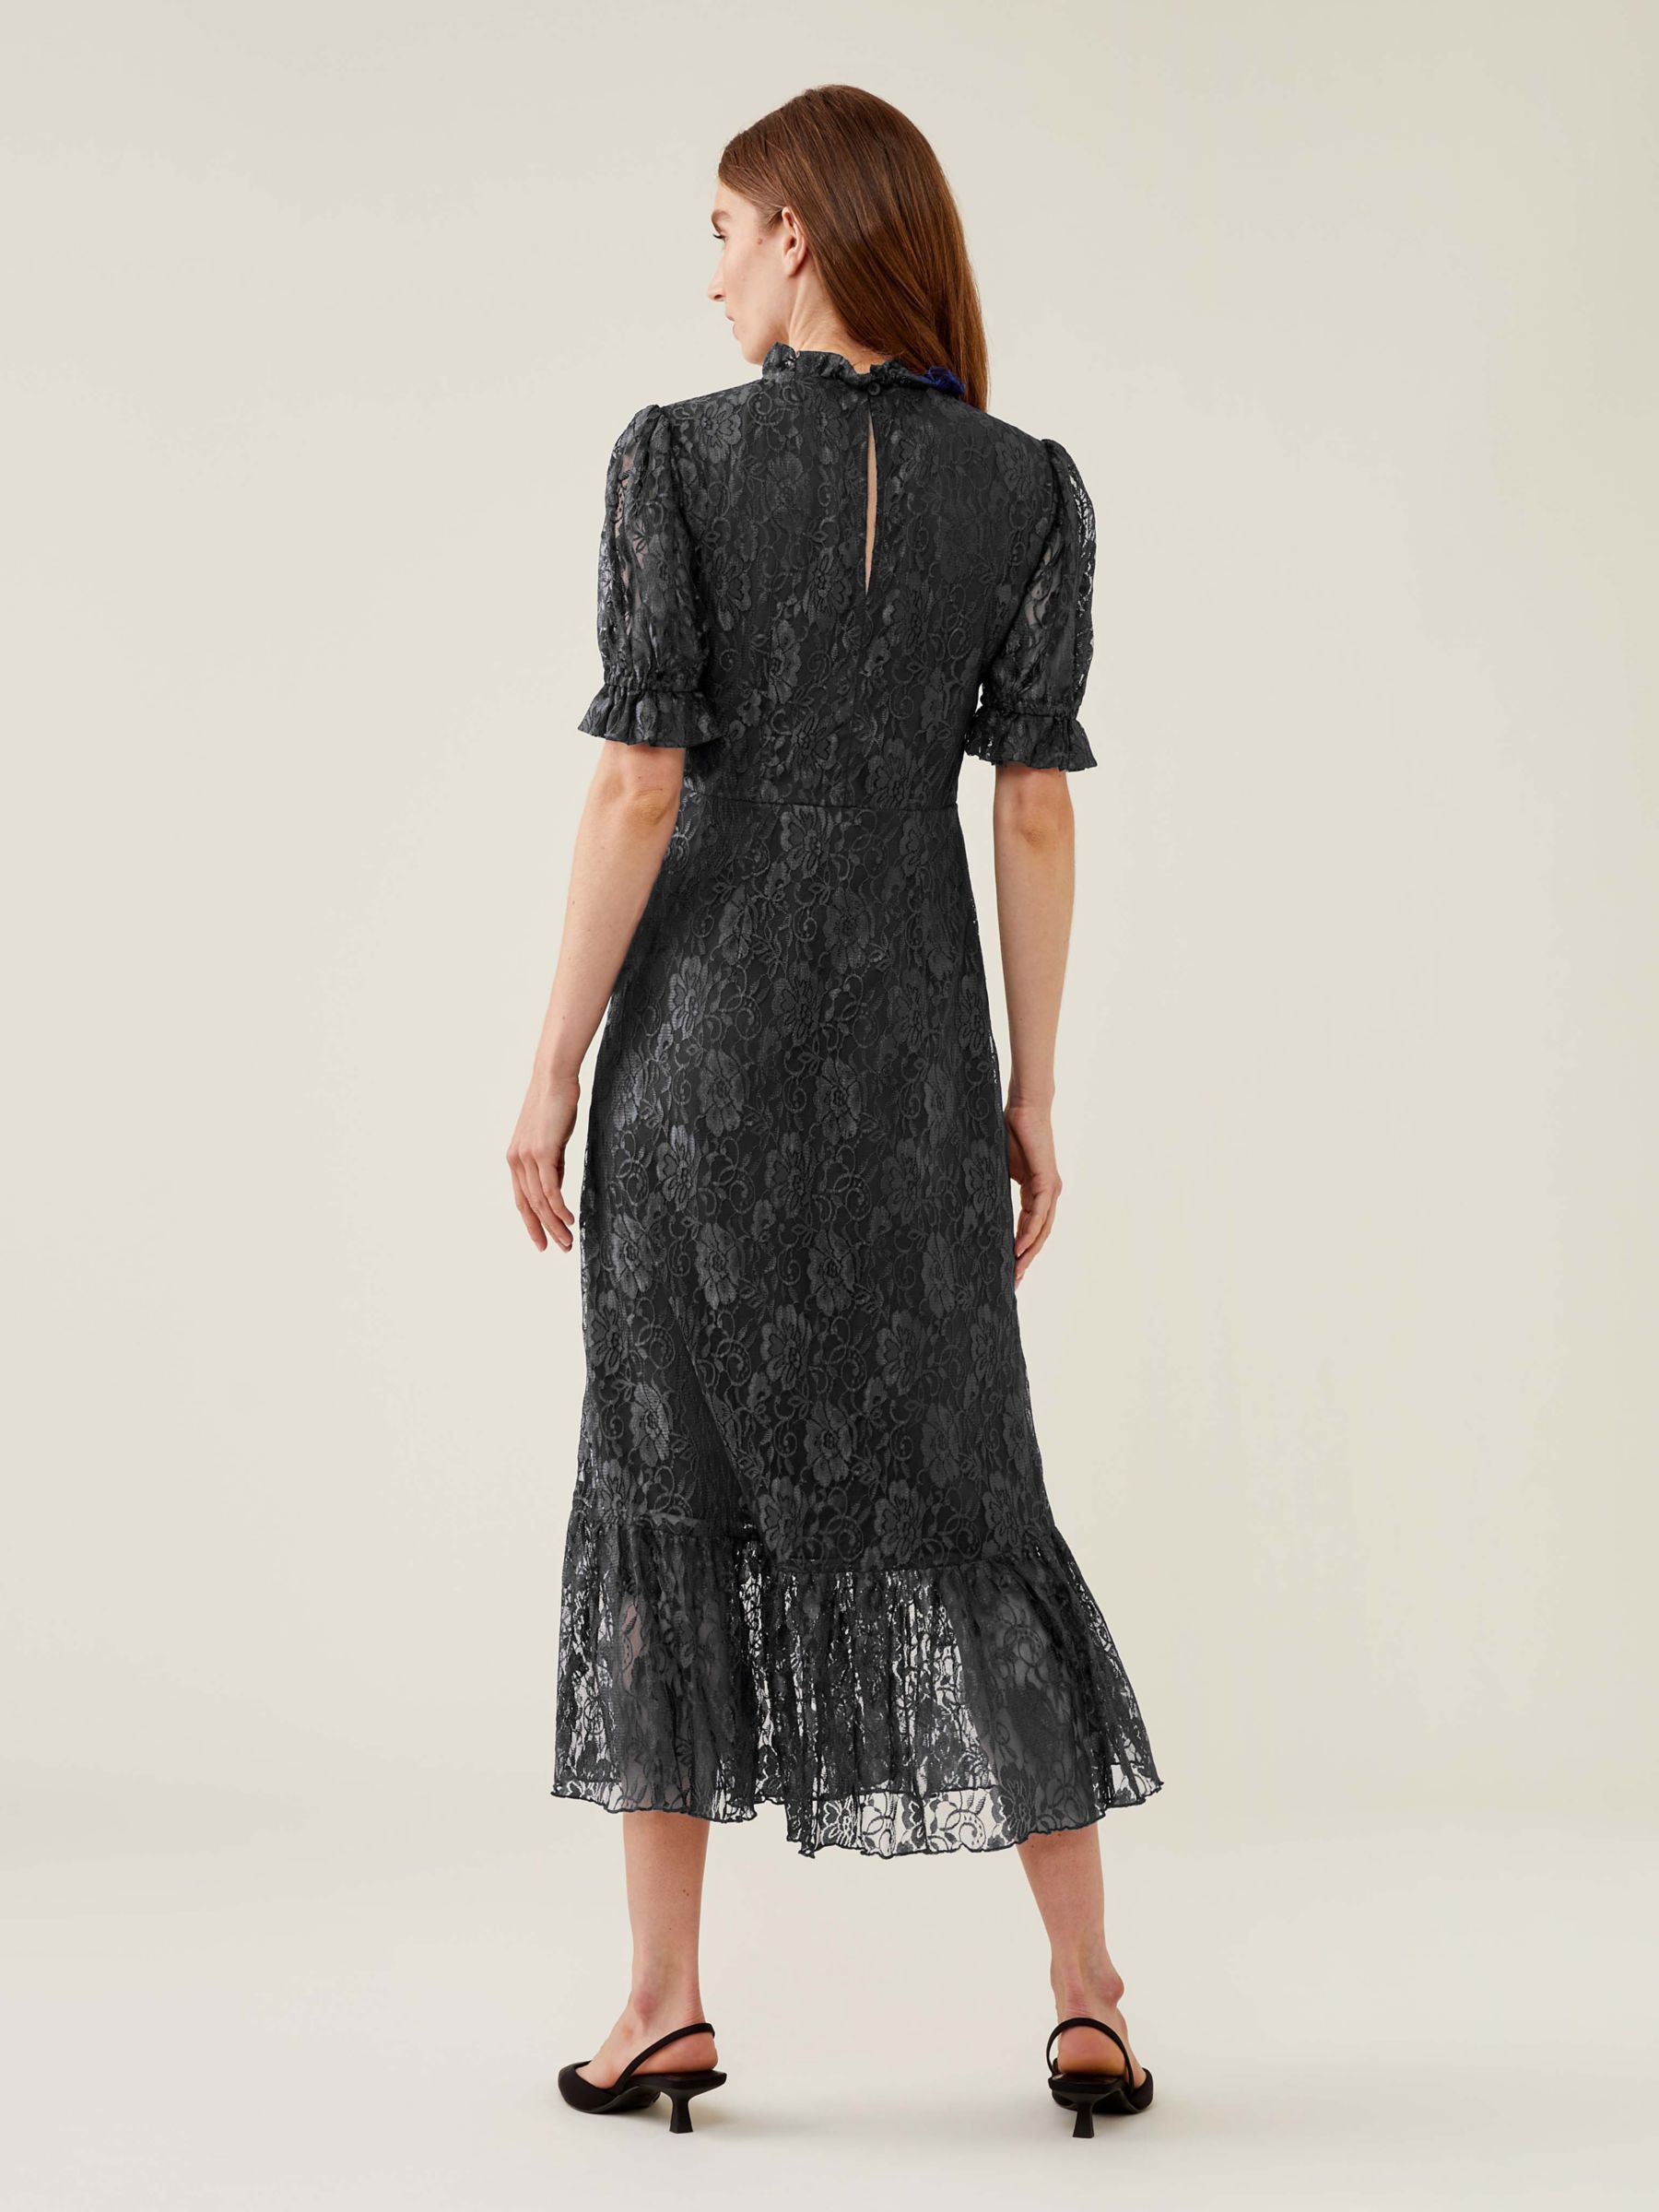 Finery Saskia Floral Lace Midi Dress, Black at John Lewis & Partners